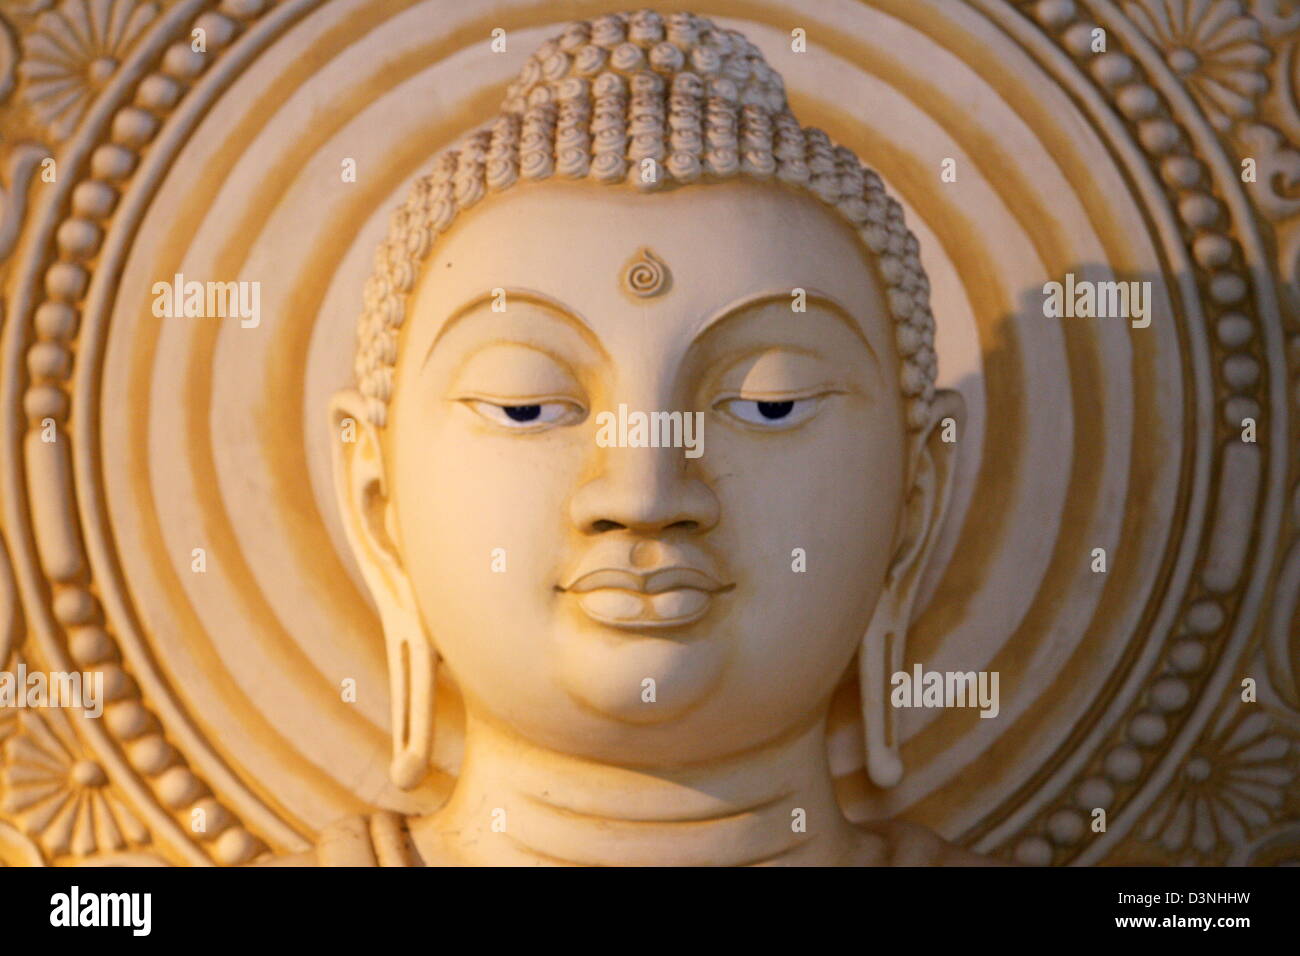 Das Bild zeigt die friedliche Antlitz des Meditierenden Buddha Siddhartha Gautama im Maharagama Tempel in Colombo, Sri Lanka, 24. April 2006. Foto: Maurizio Gambarini Stockfoto